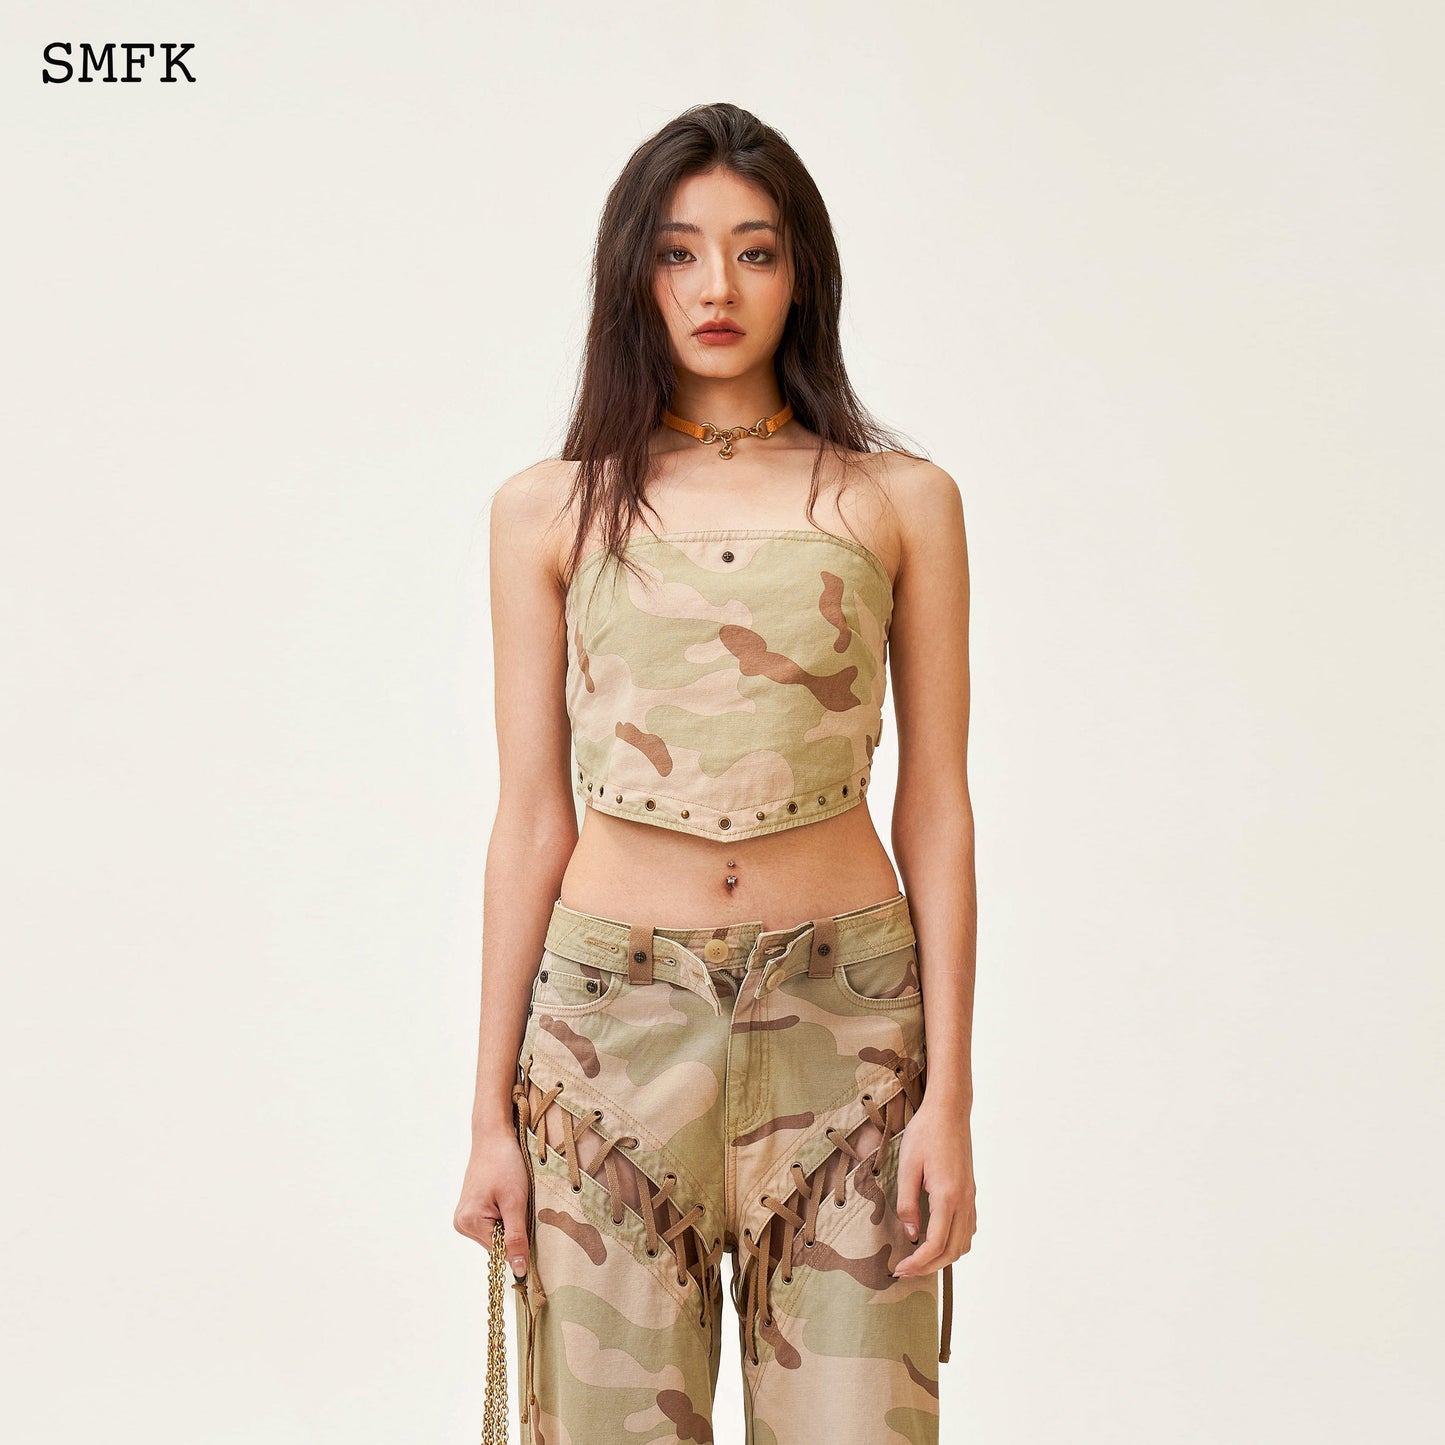 SMFK Ancient Myth Camouflage Desert Wide-Leg Jeans